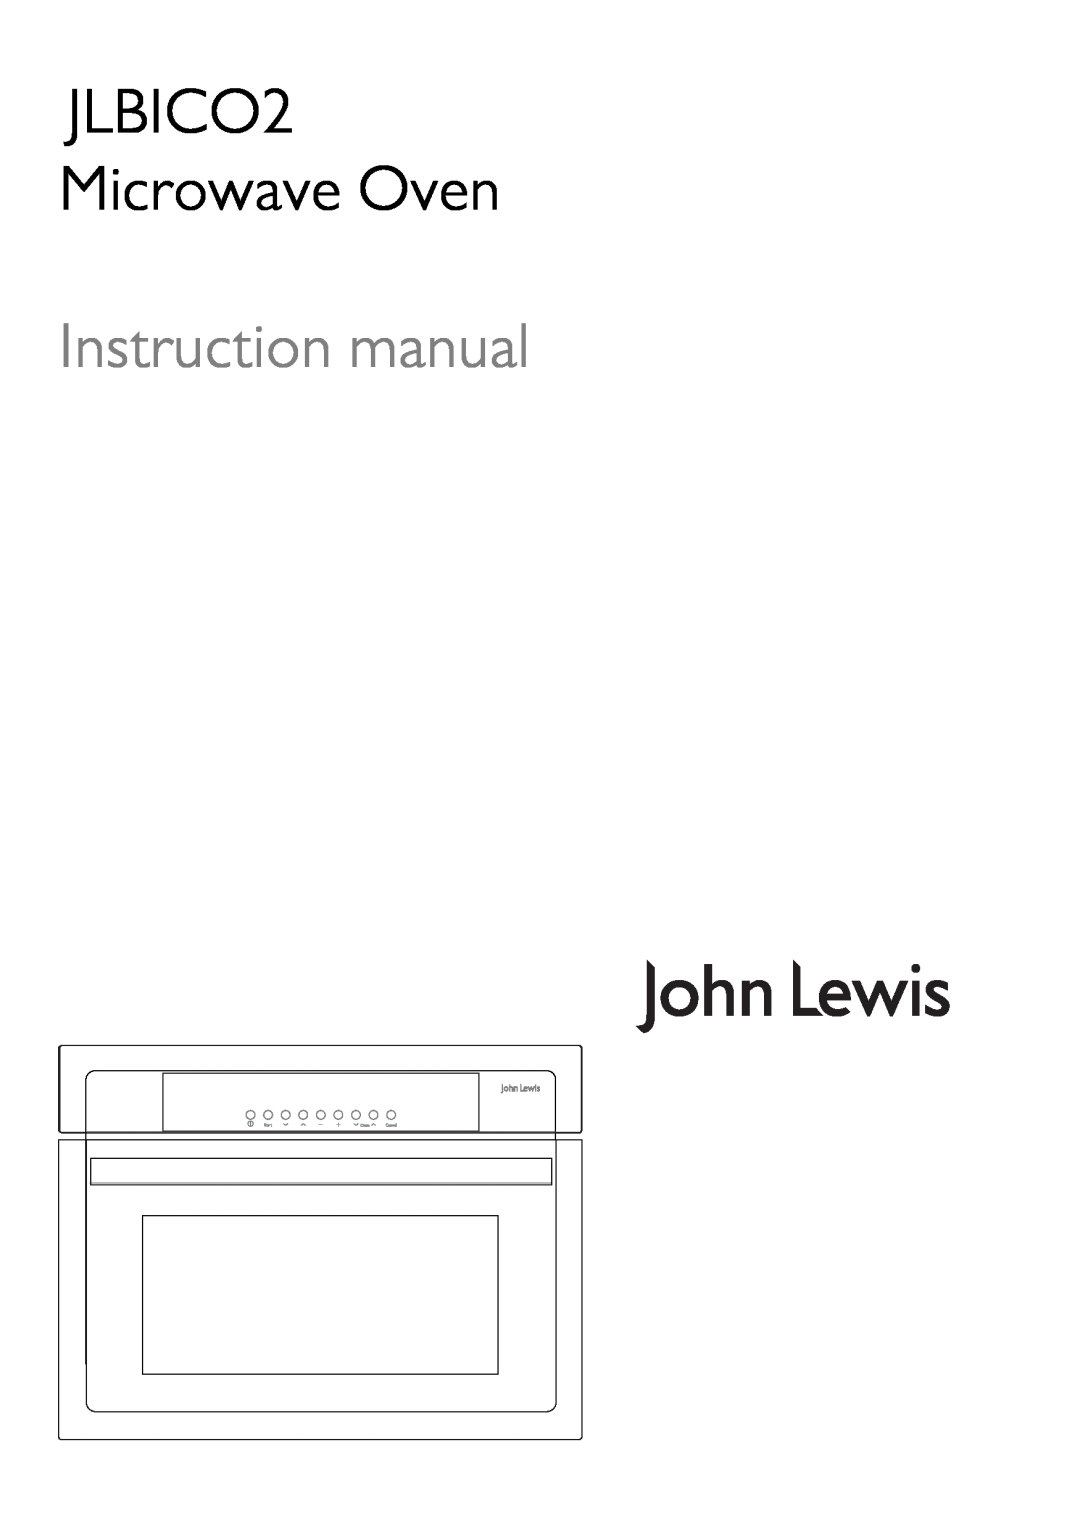 John Lewis instruction manual JLBICO2 Microwave Oven 